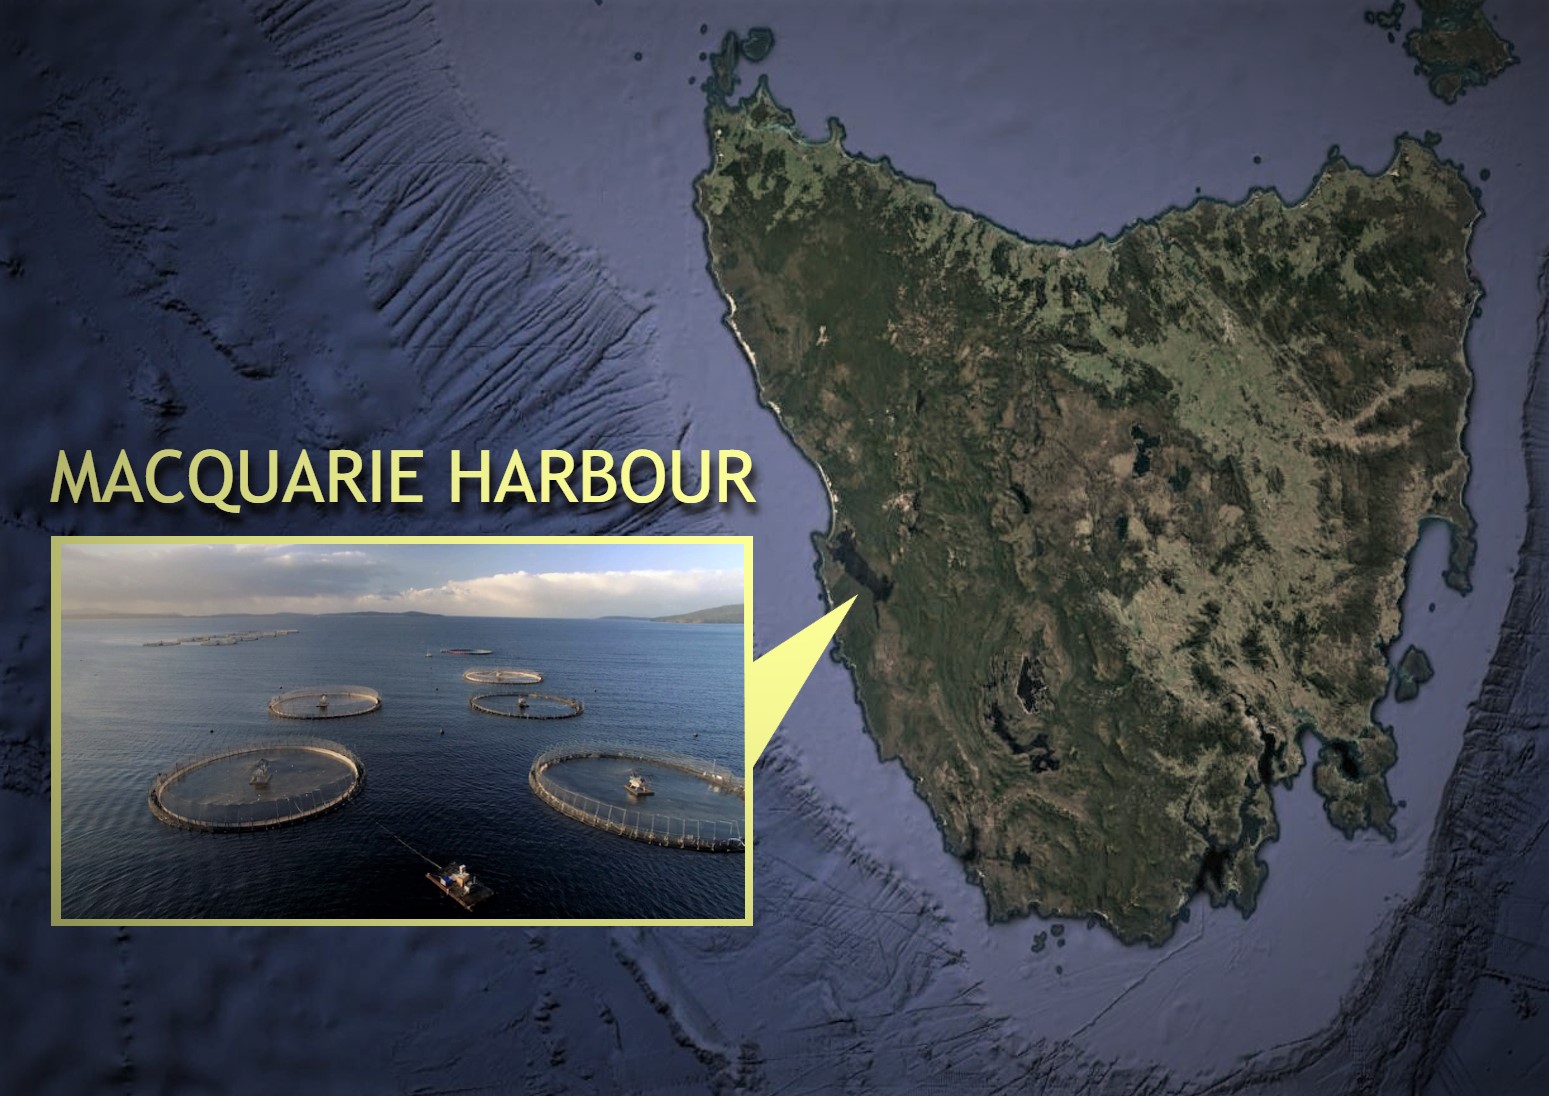 Map showing Macquarie Harbour location in Tasmania.